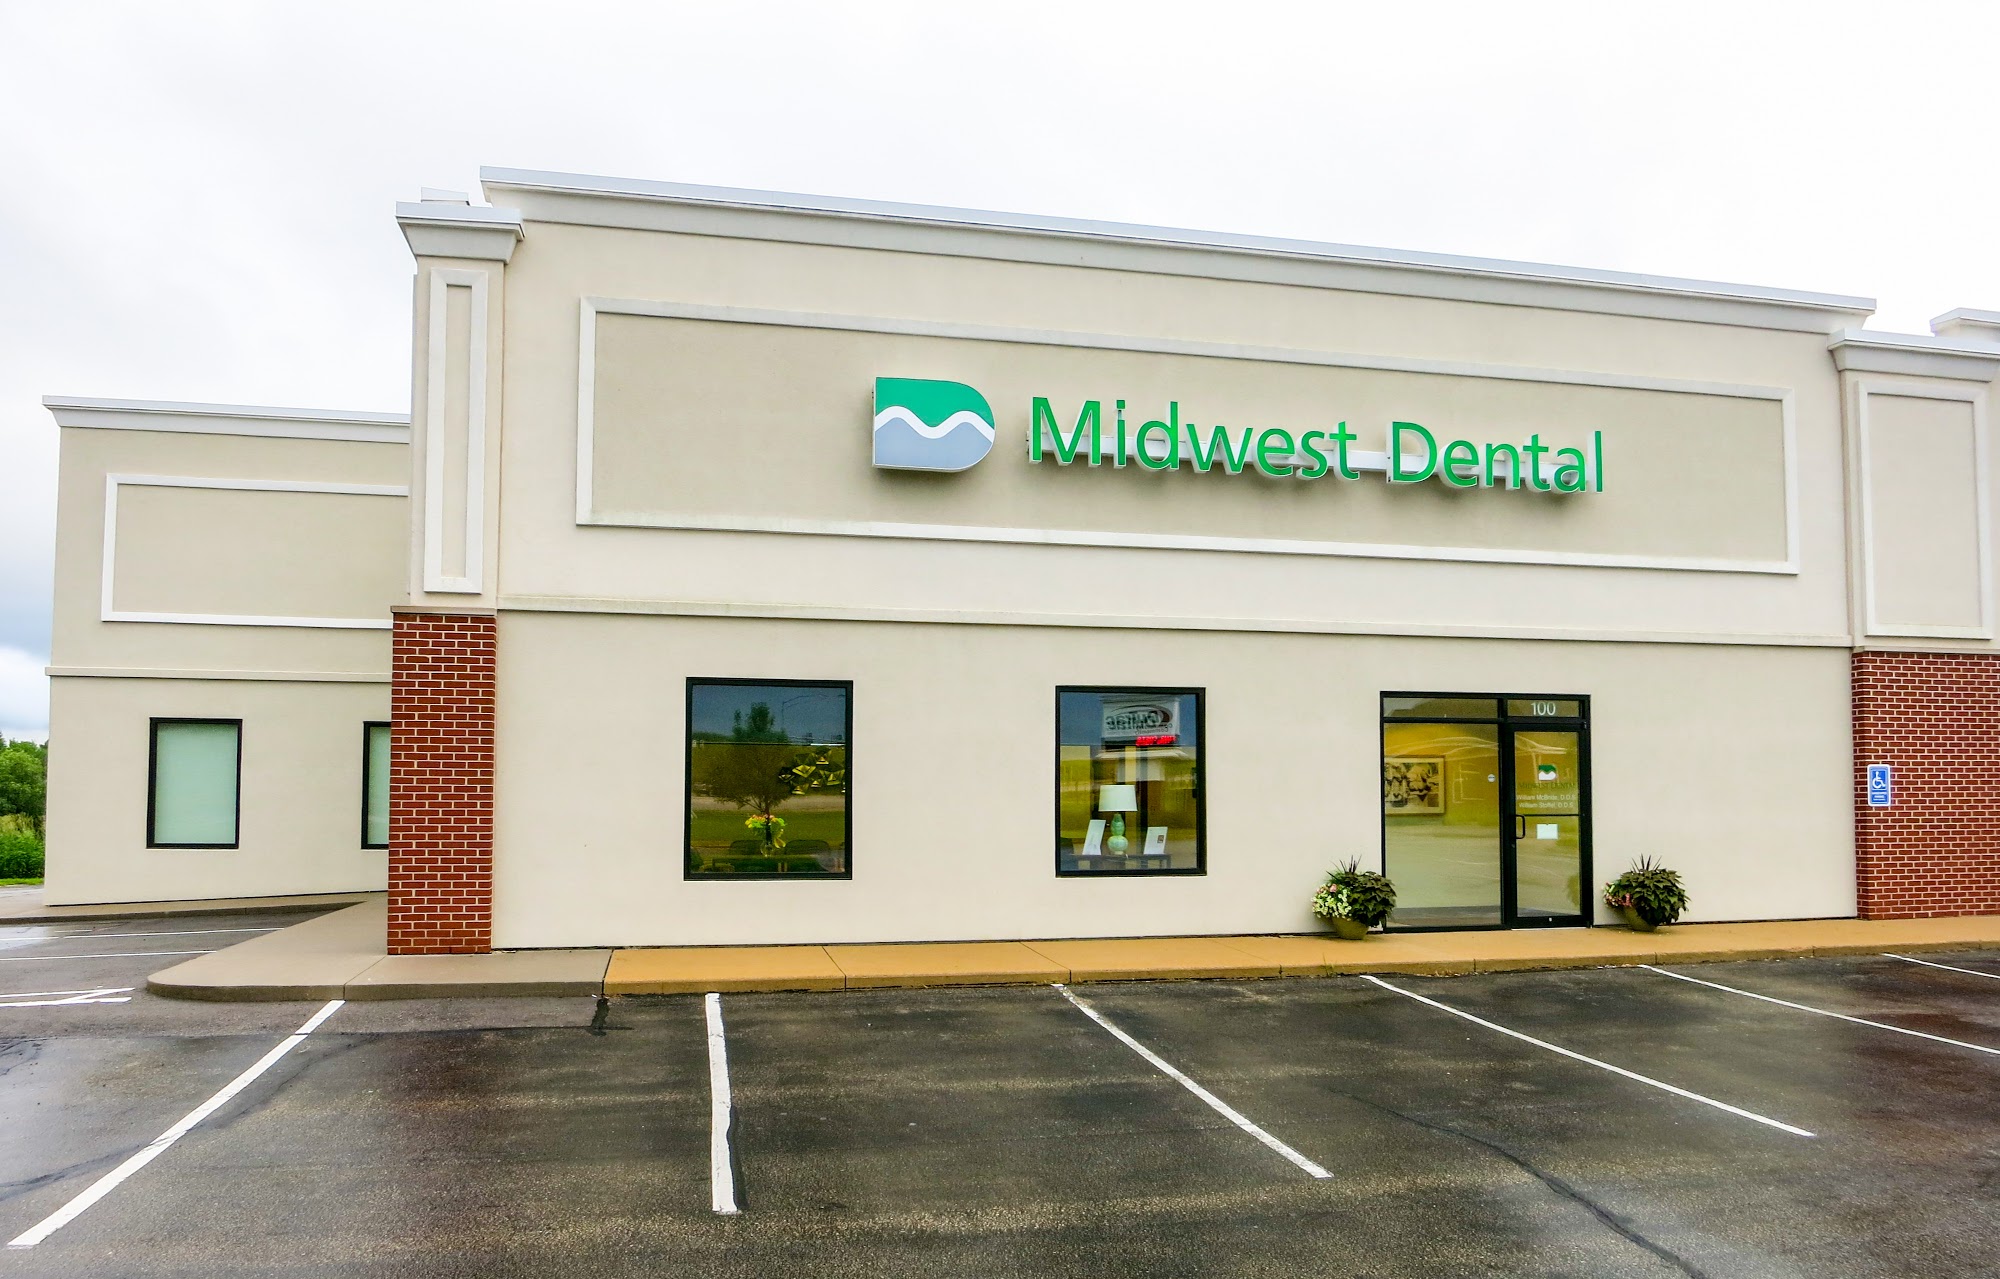 Midwest Dental